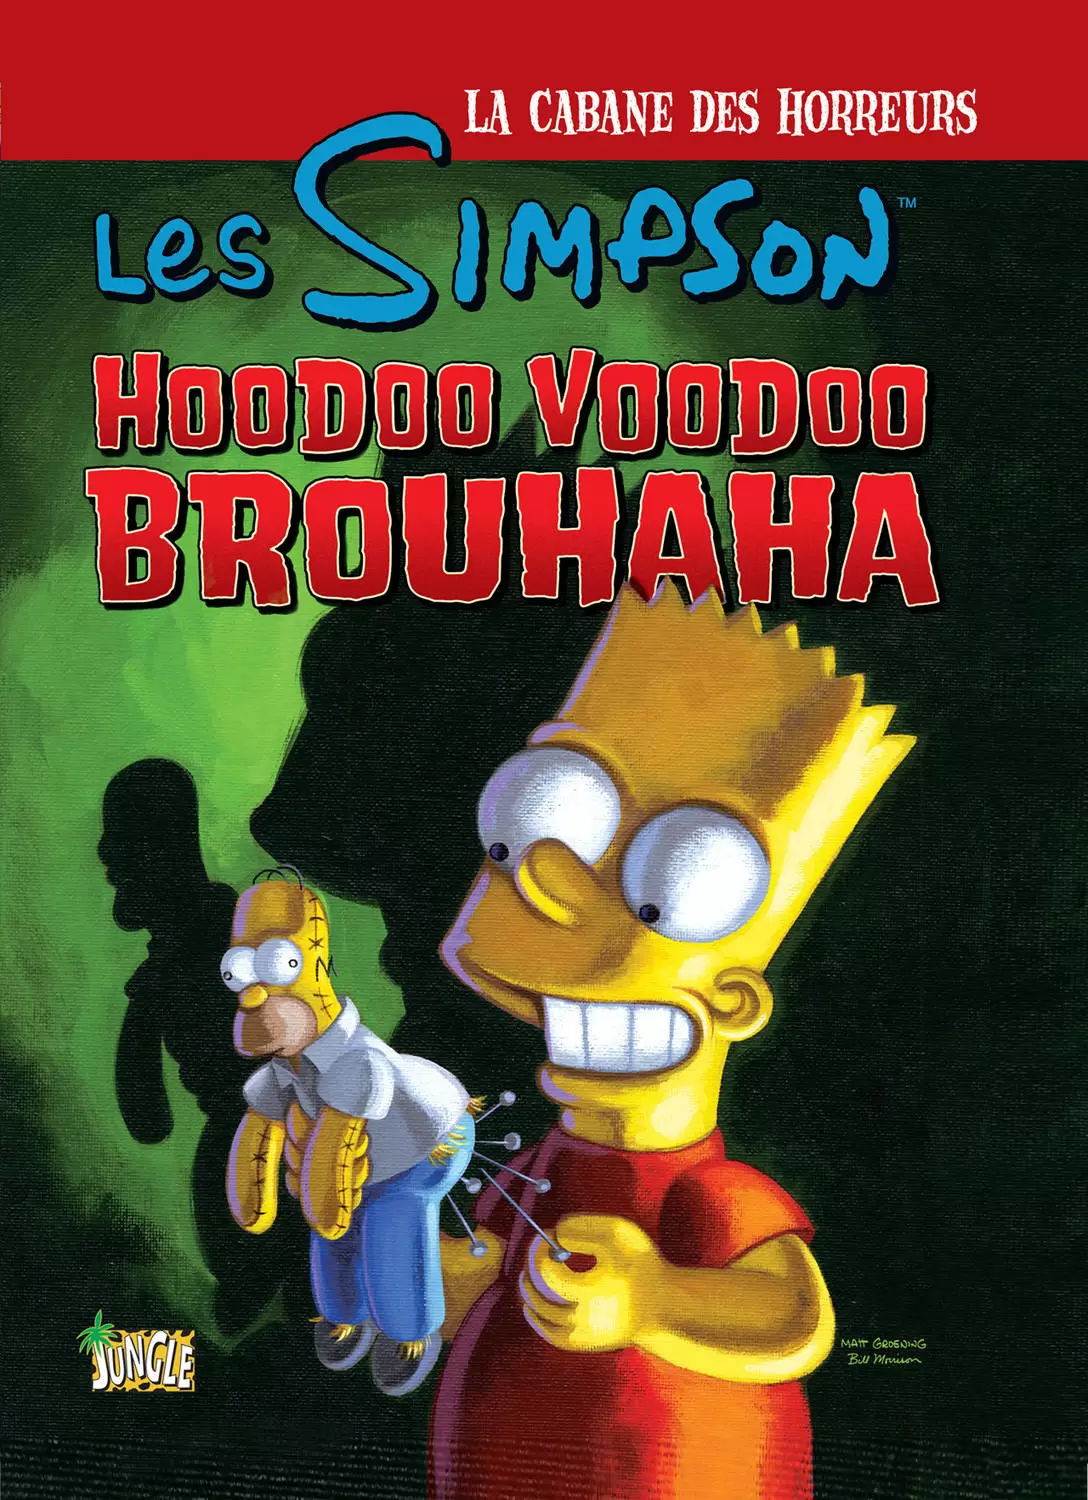 Les Simpson - La cabane des horreurs - Hoodoo Voodoo Brouhaha